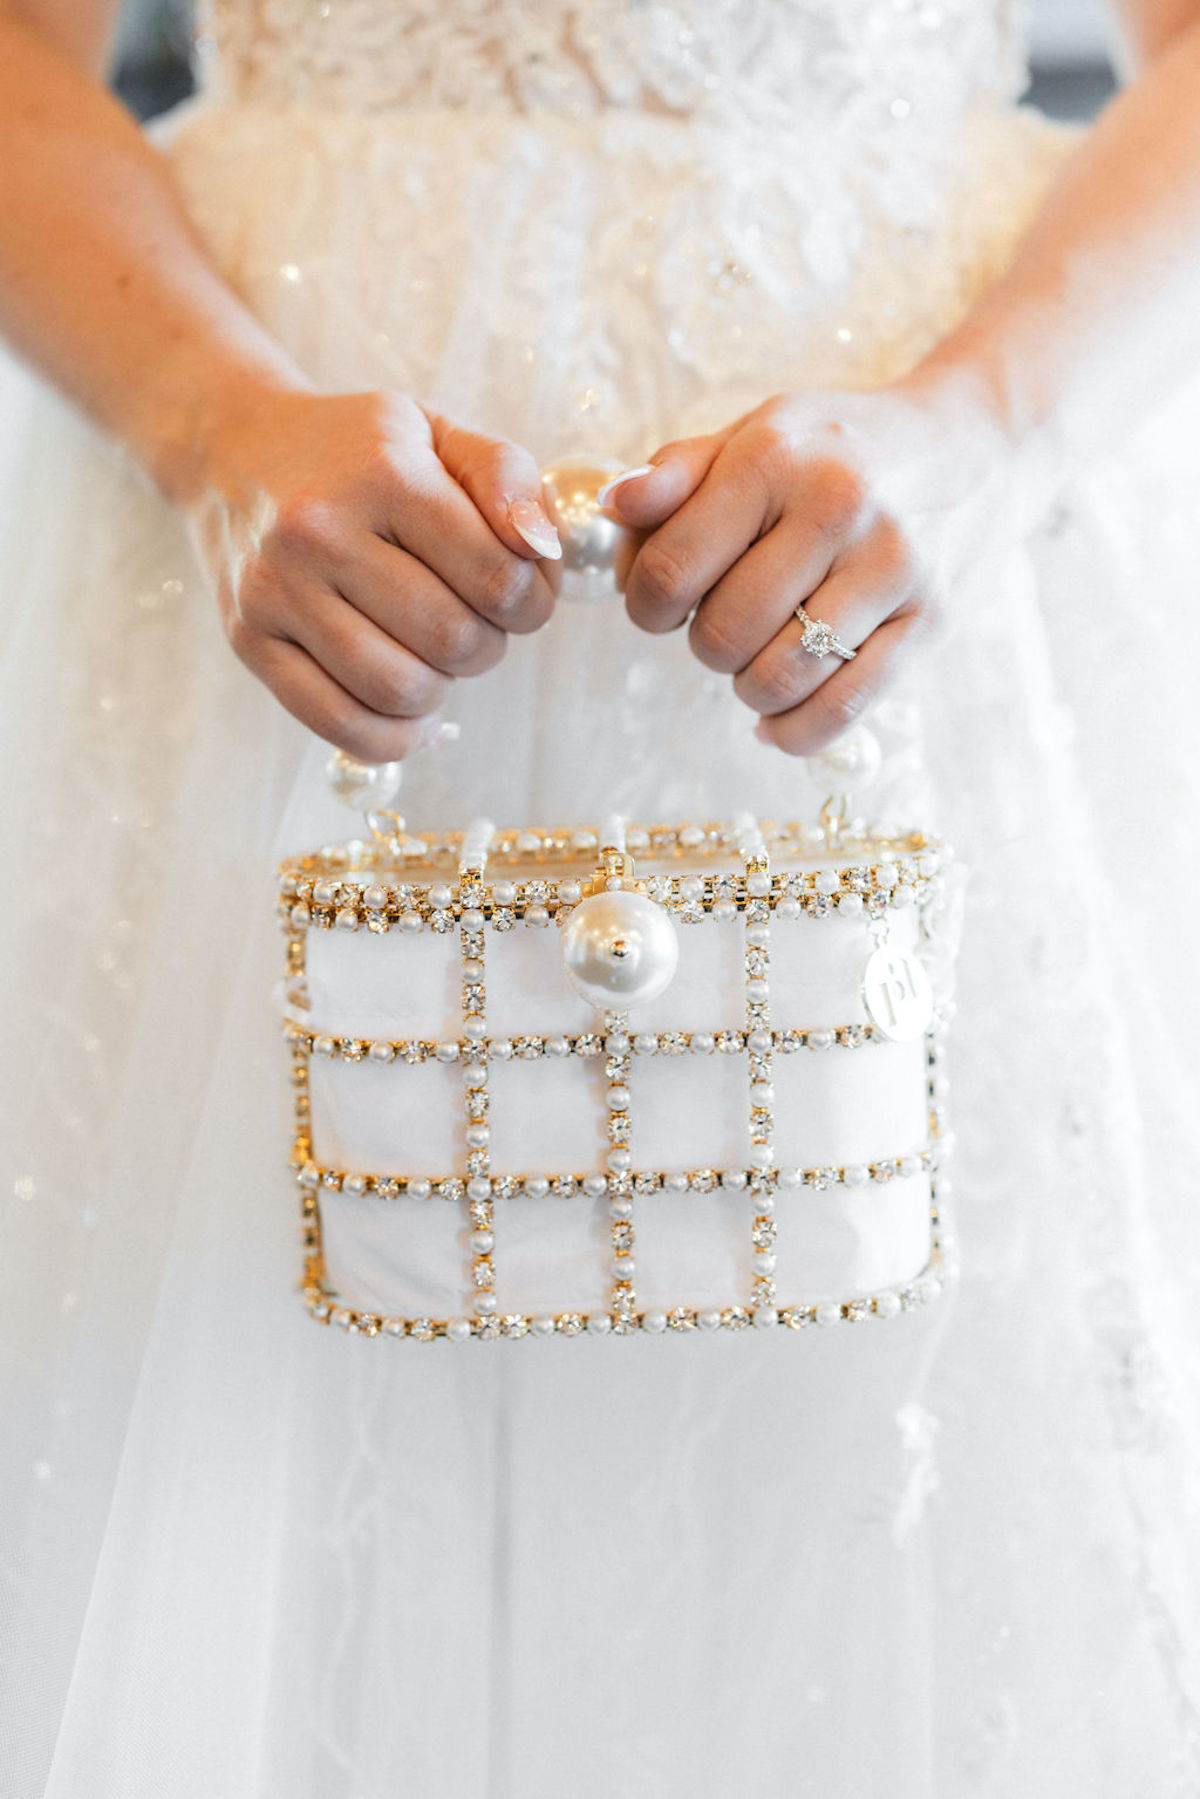 wedding purses with pearls and rhinestones